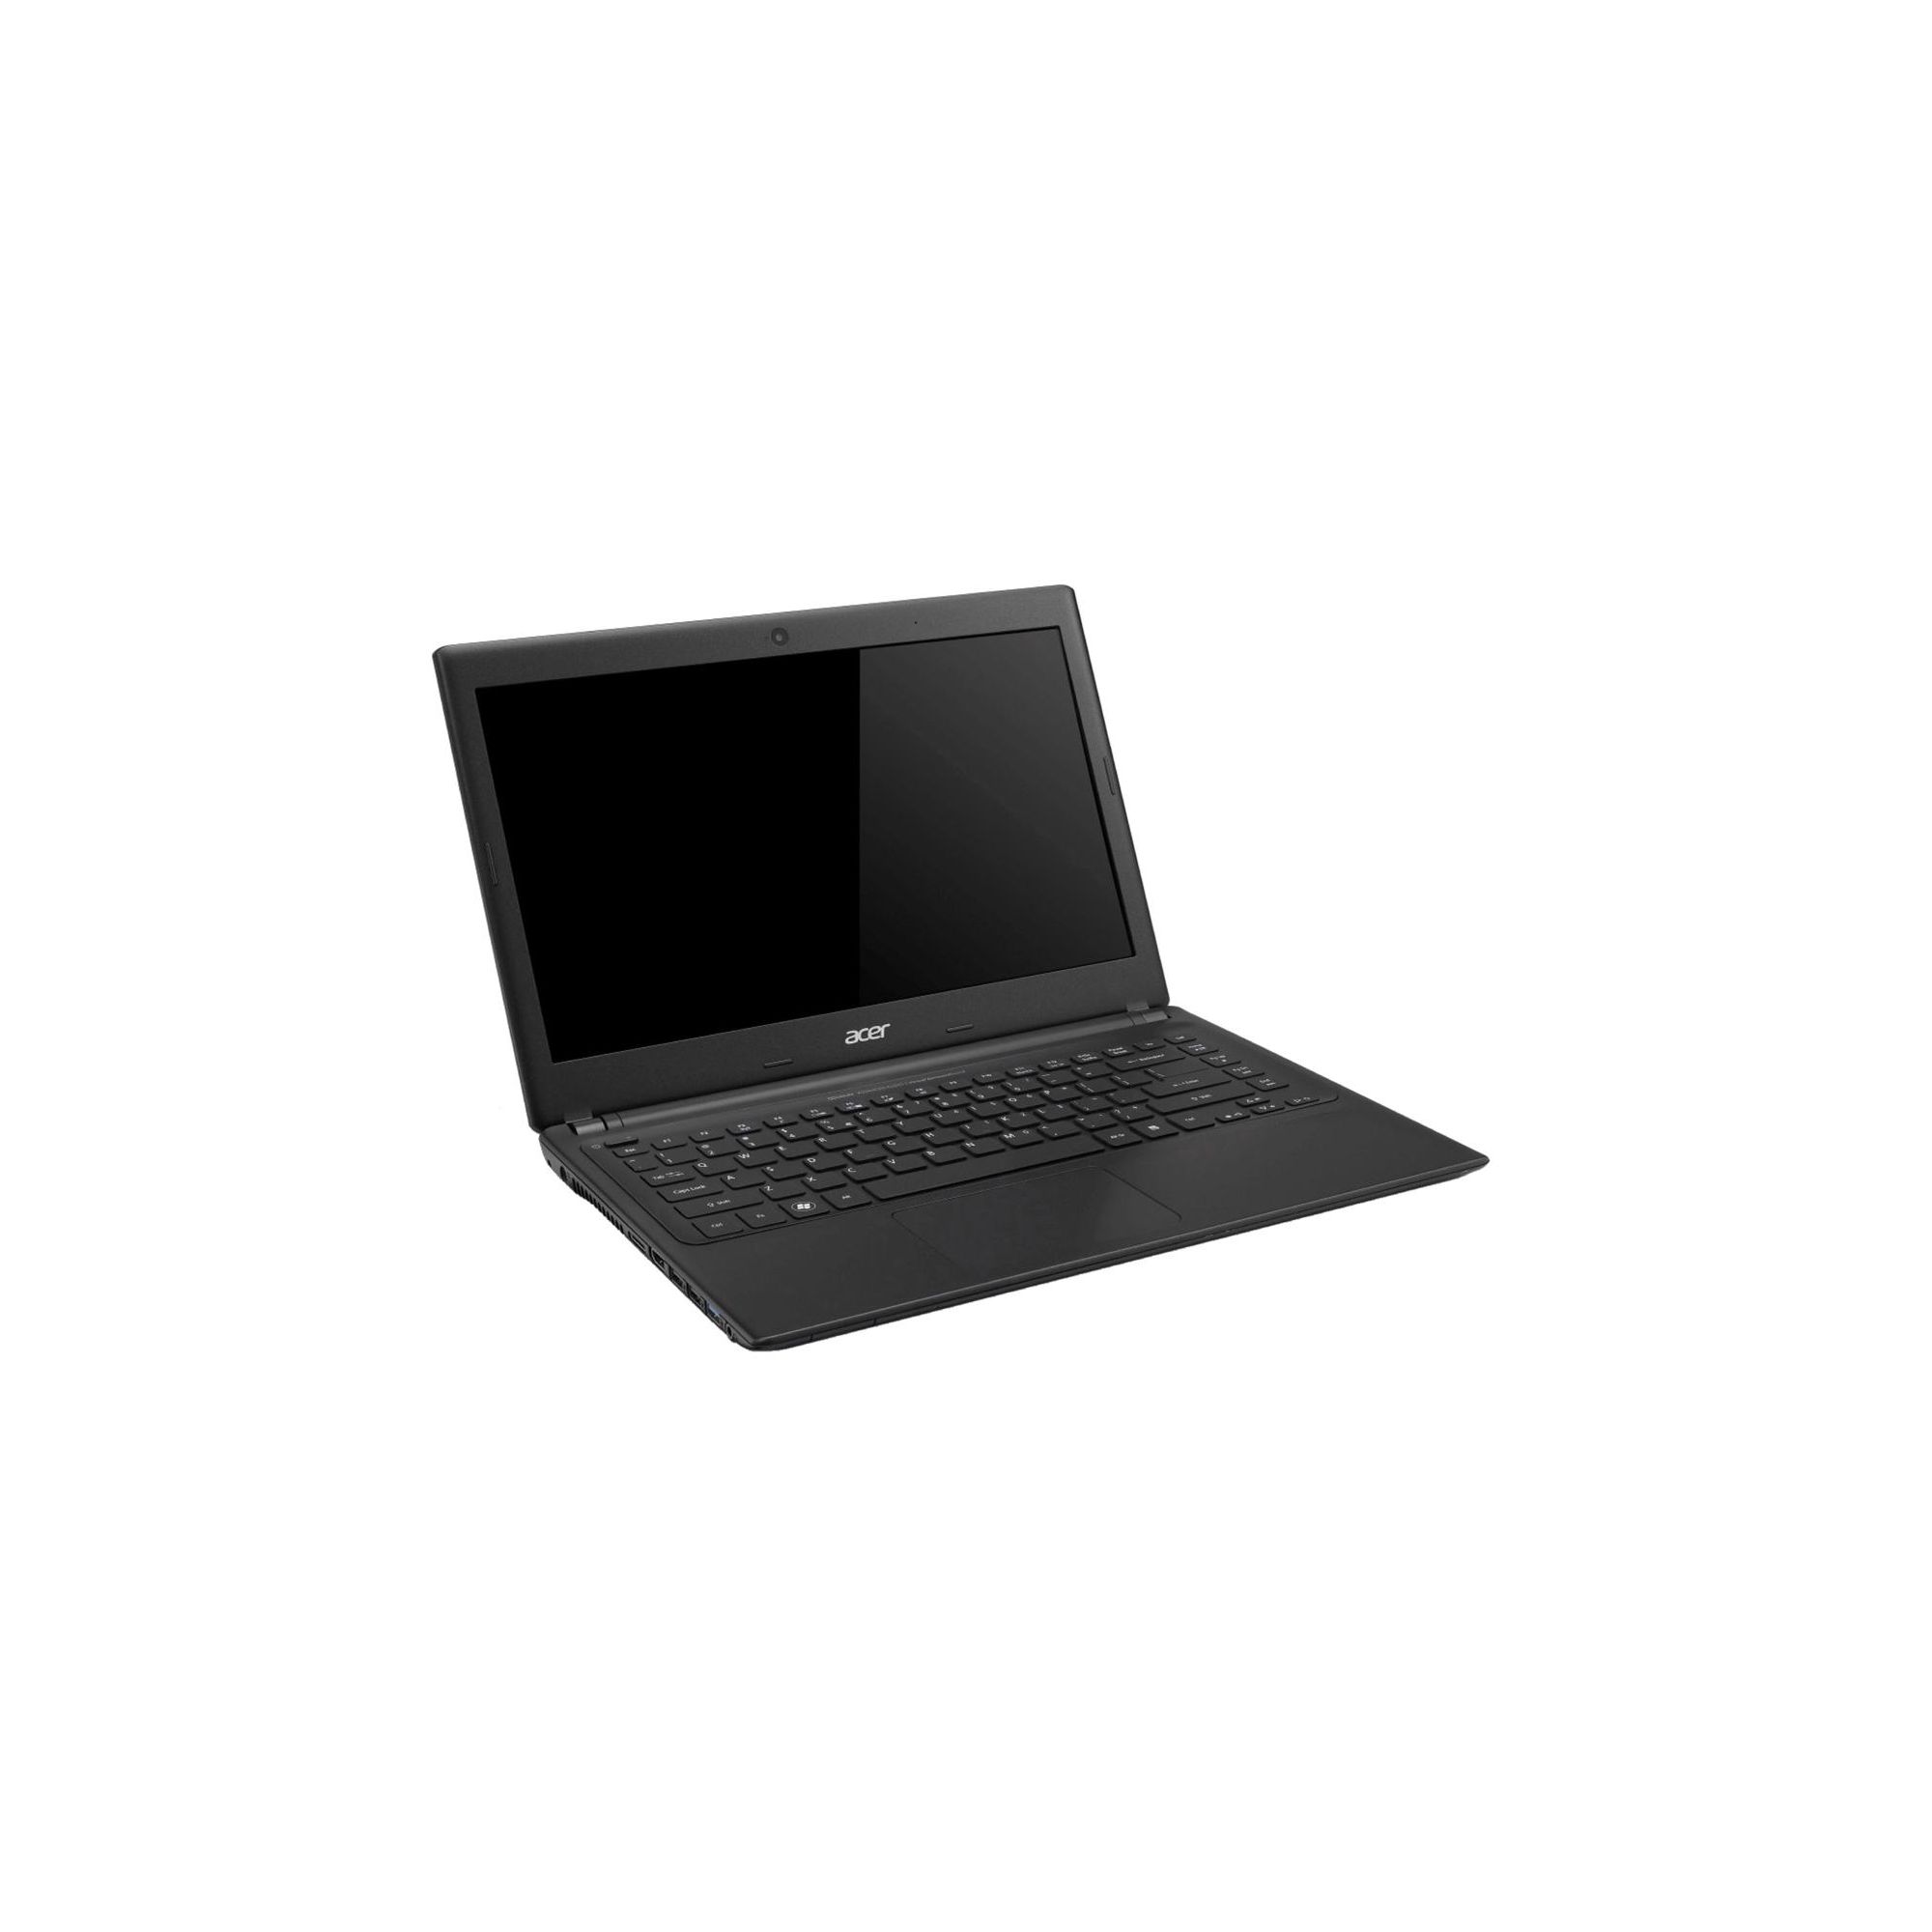 Acer Aspire V5-571 (15.6 inch) Notebook Core i5 (3317U) 1.7GHz 8GB 500GB DVD-SM DL WLAN BT Webcam Windows 8 (64-bit) Intel HD Graphics 3000 (Matte at Tesco Direct